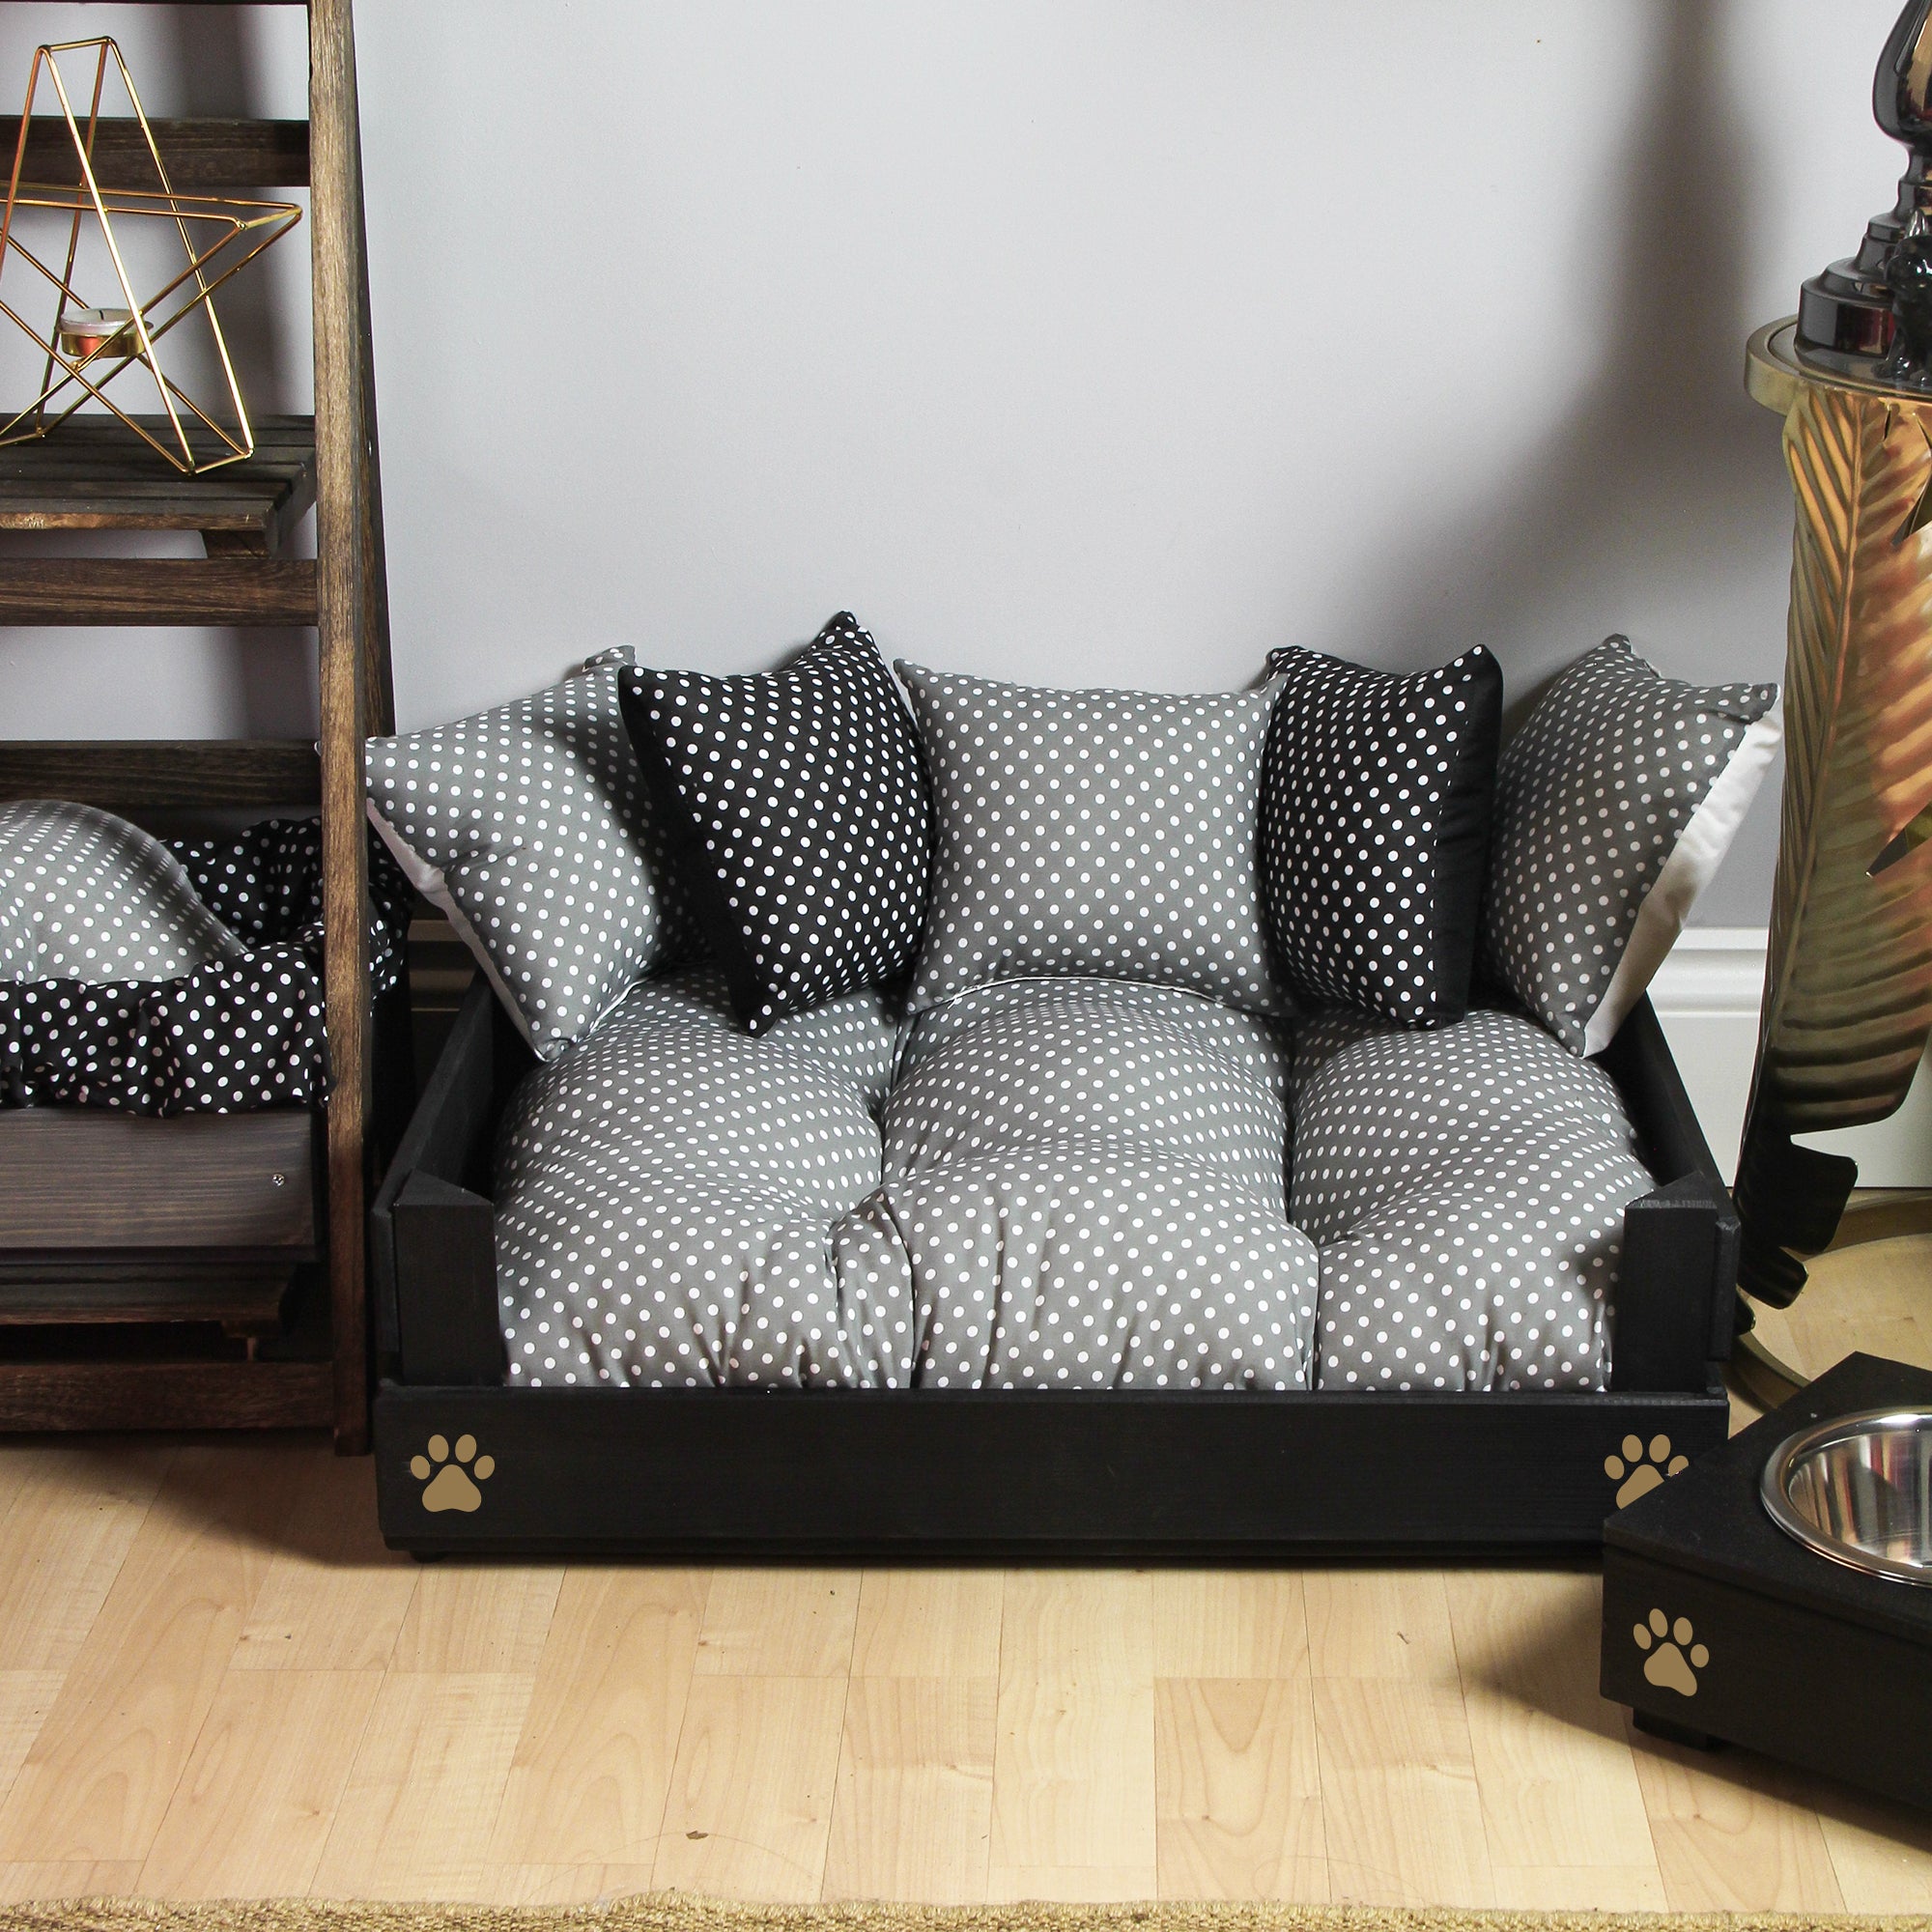 Small Wooden Personalised Dog Bed (46 x 59cm) - Ebony Black & Grey Polka Dot